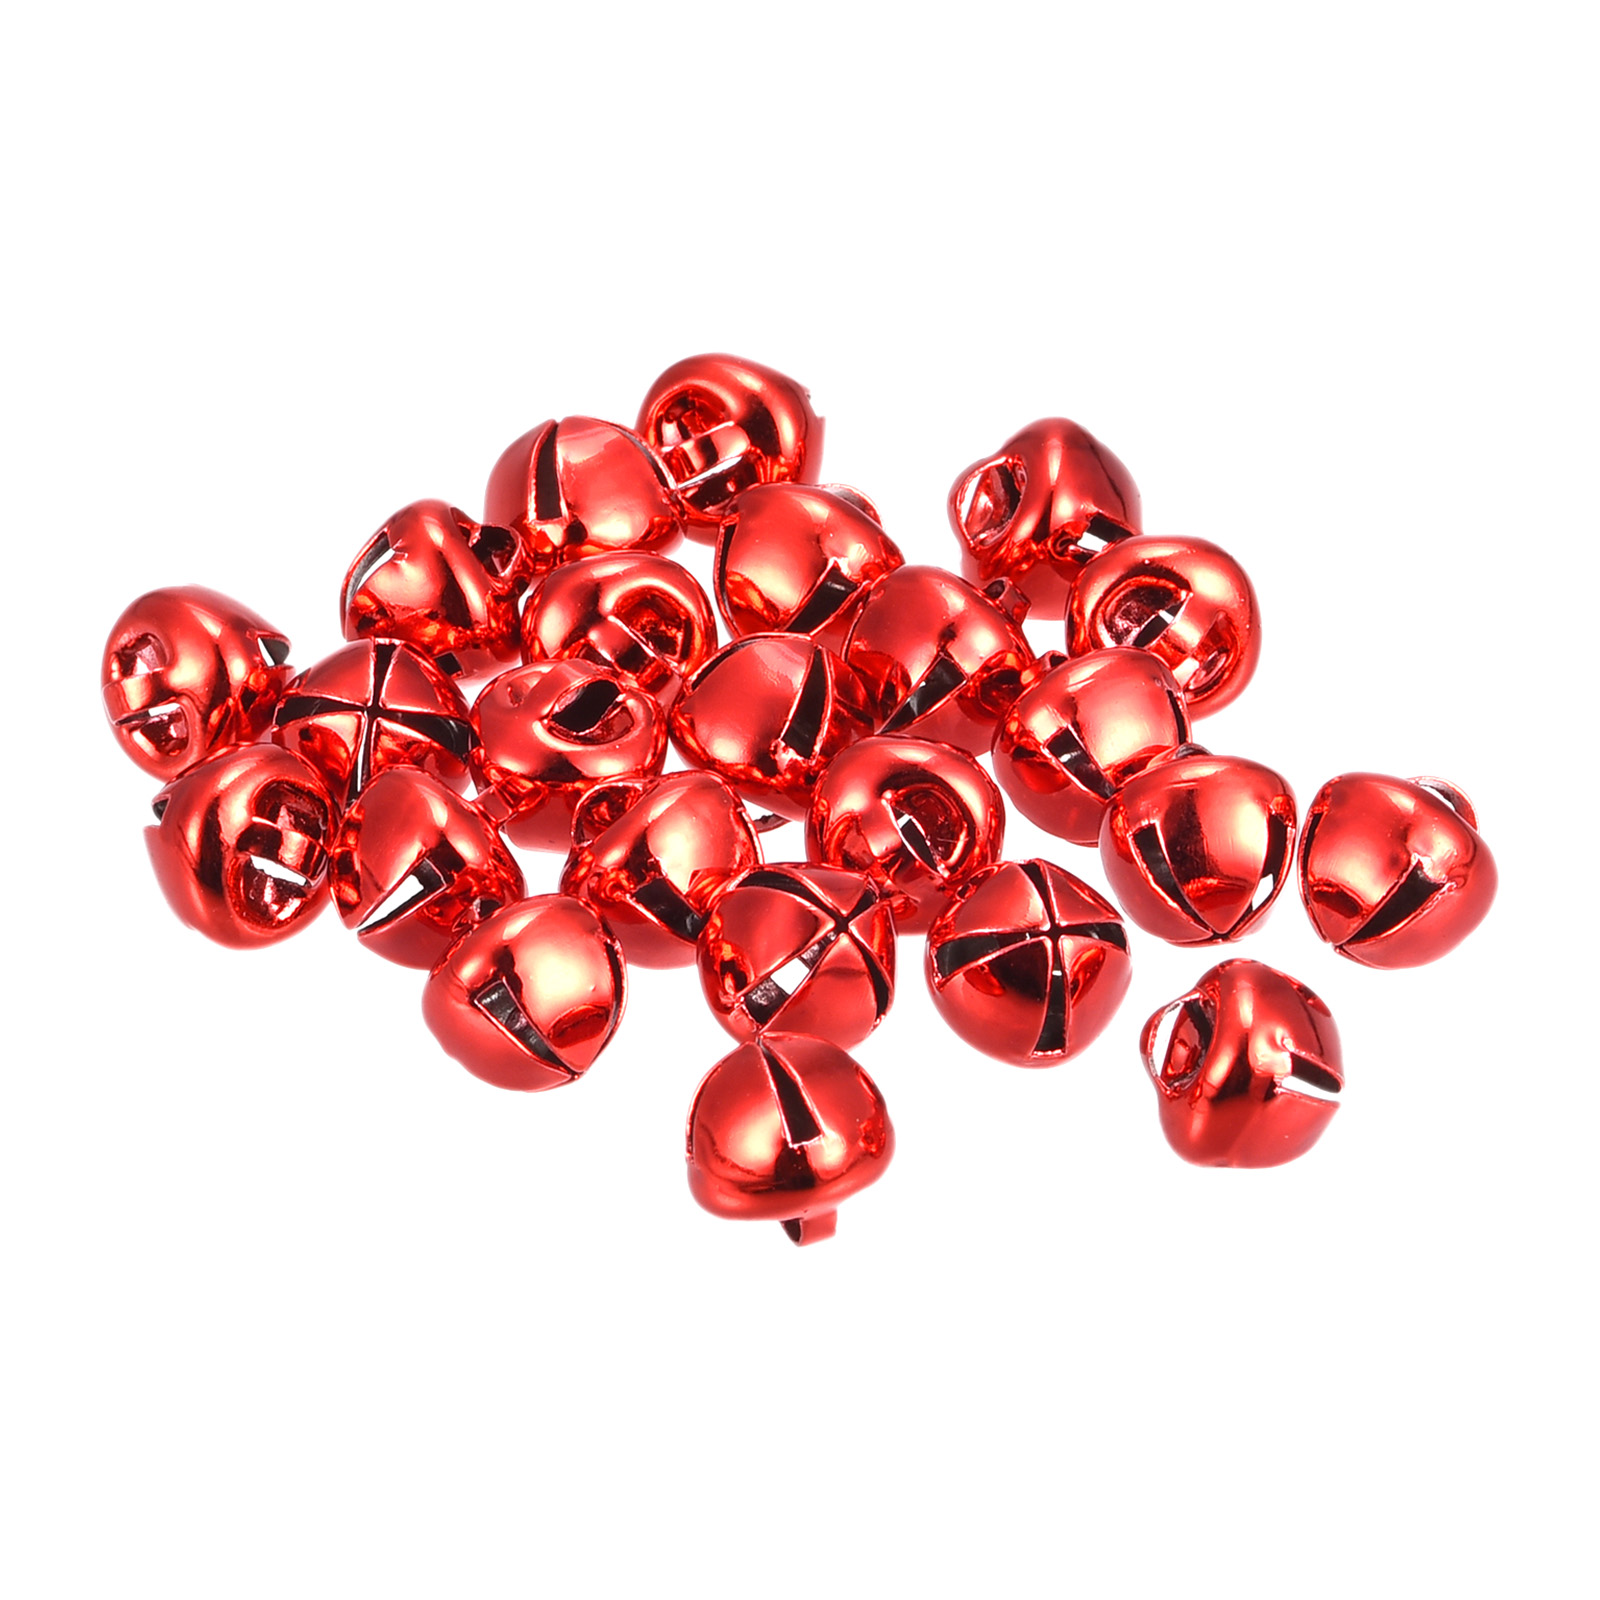 8mm Jingle Bells Craft Bells Carbon Steel Electroplating Red 24 Pack - image 1 of 5